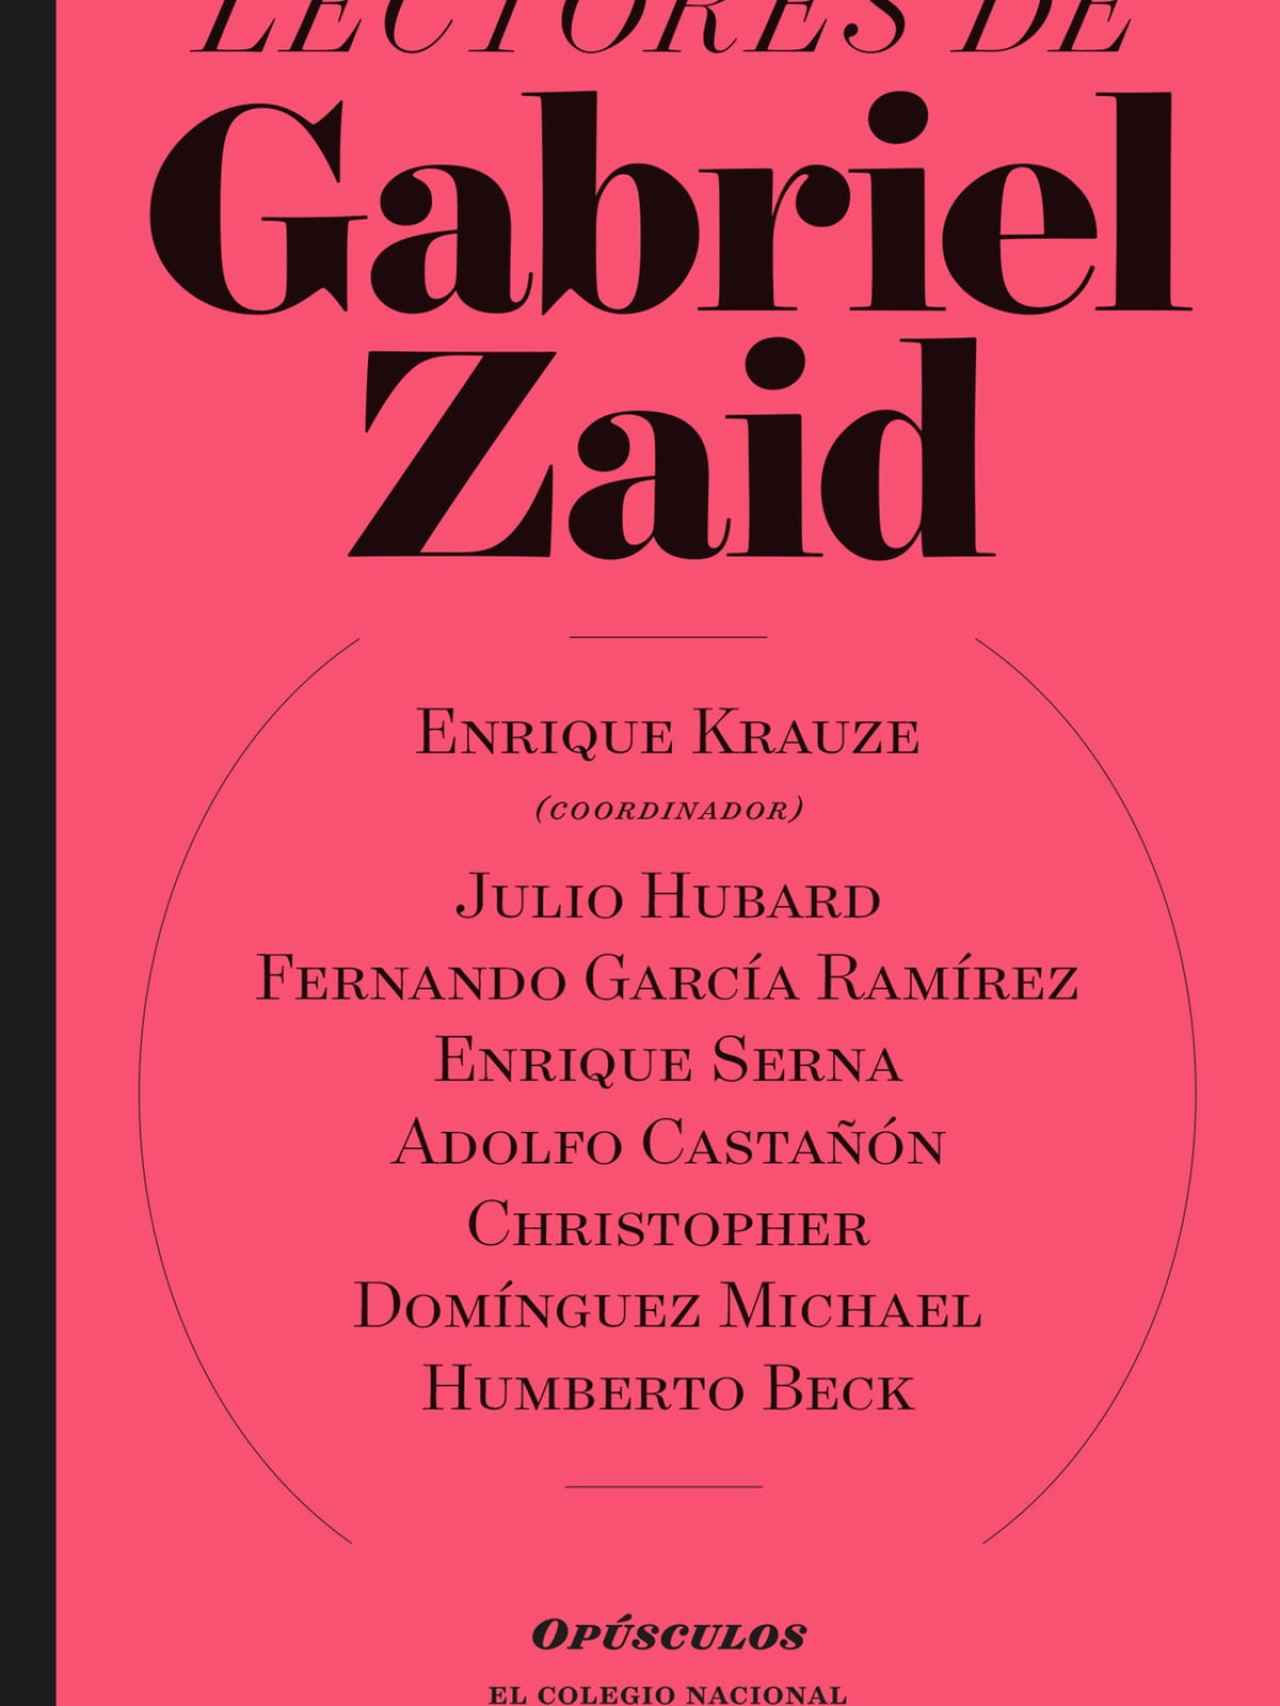 Libro de homenaje a Gabriel Zaid